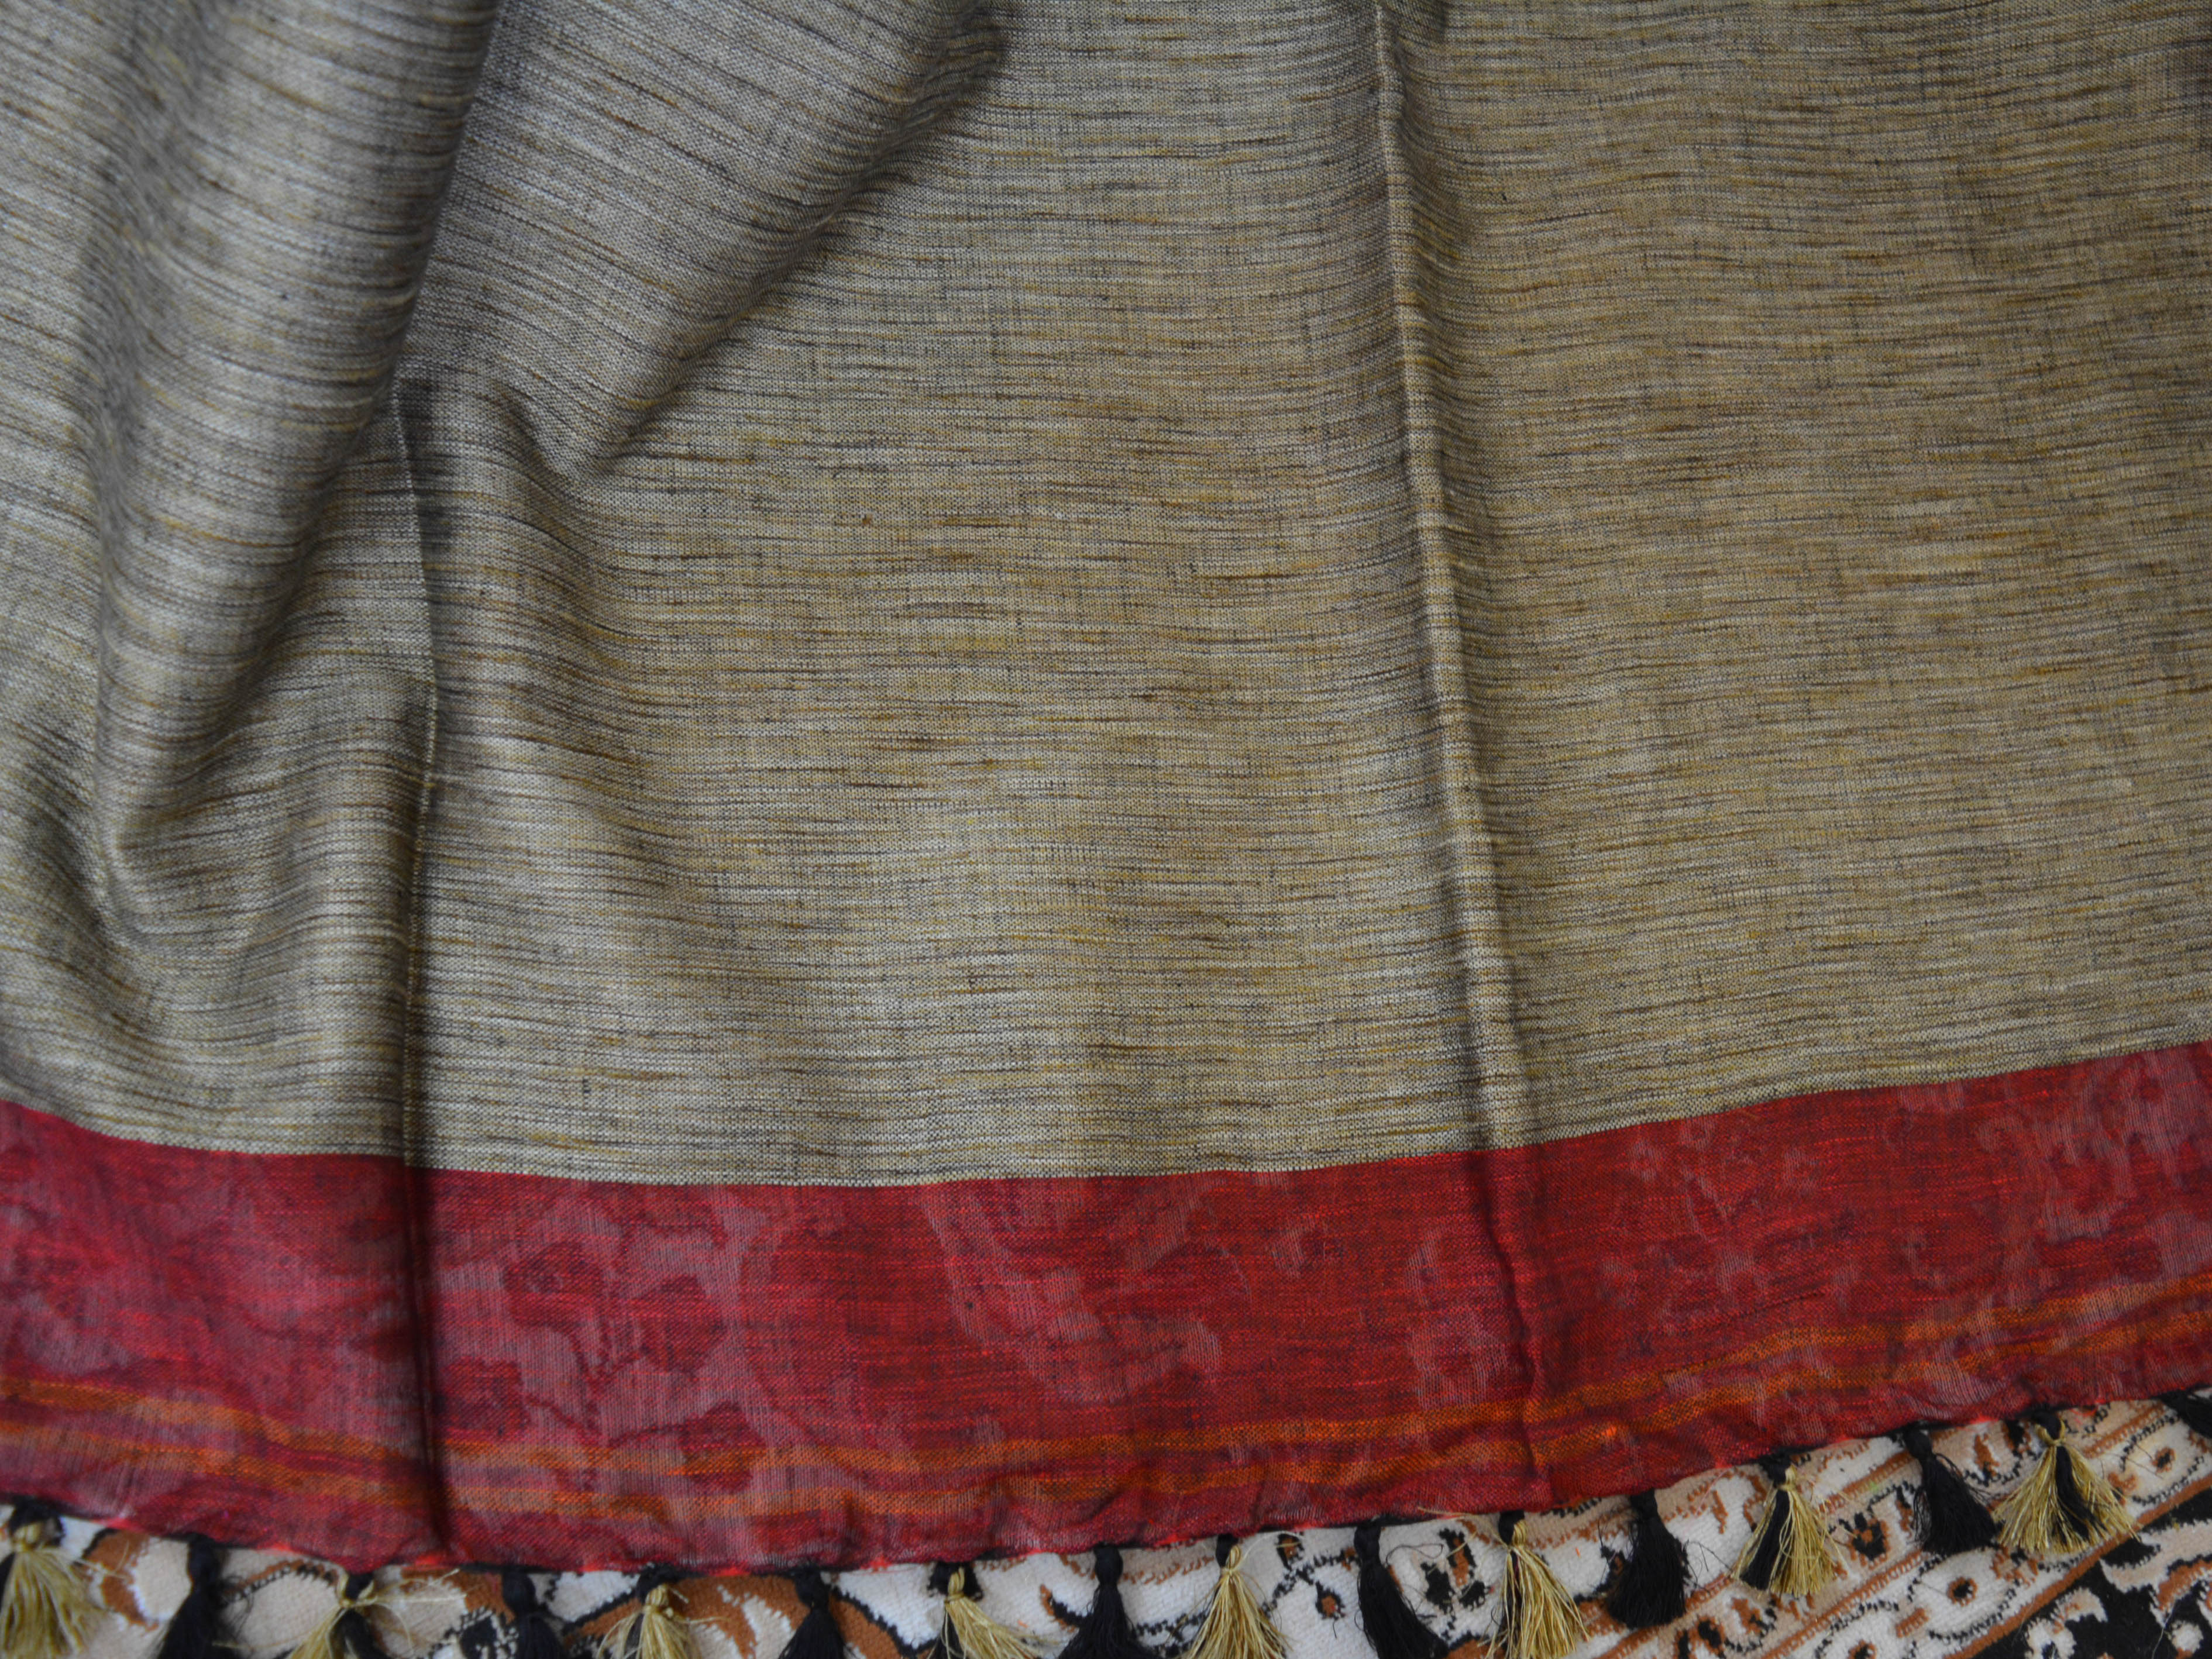 Bhagalpuri Handloom Pure Linen Saree-Deep Red With Rust